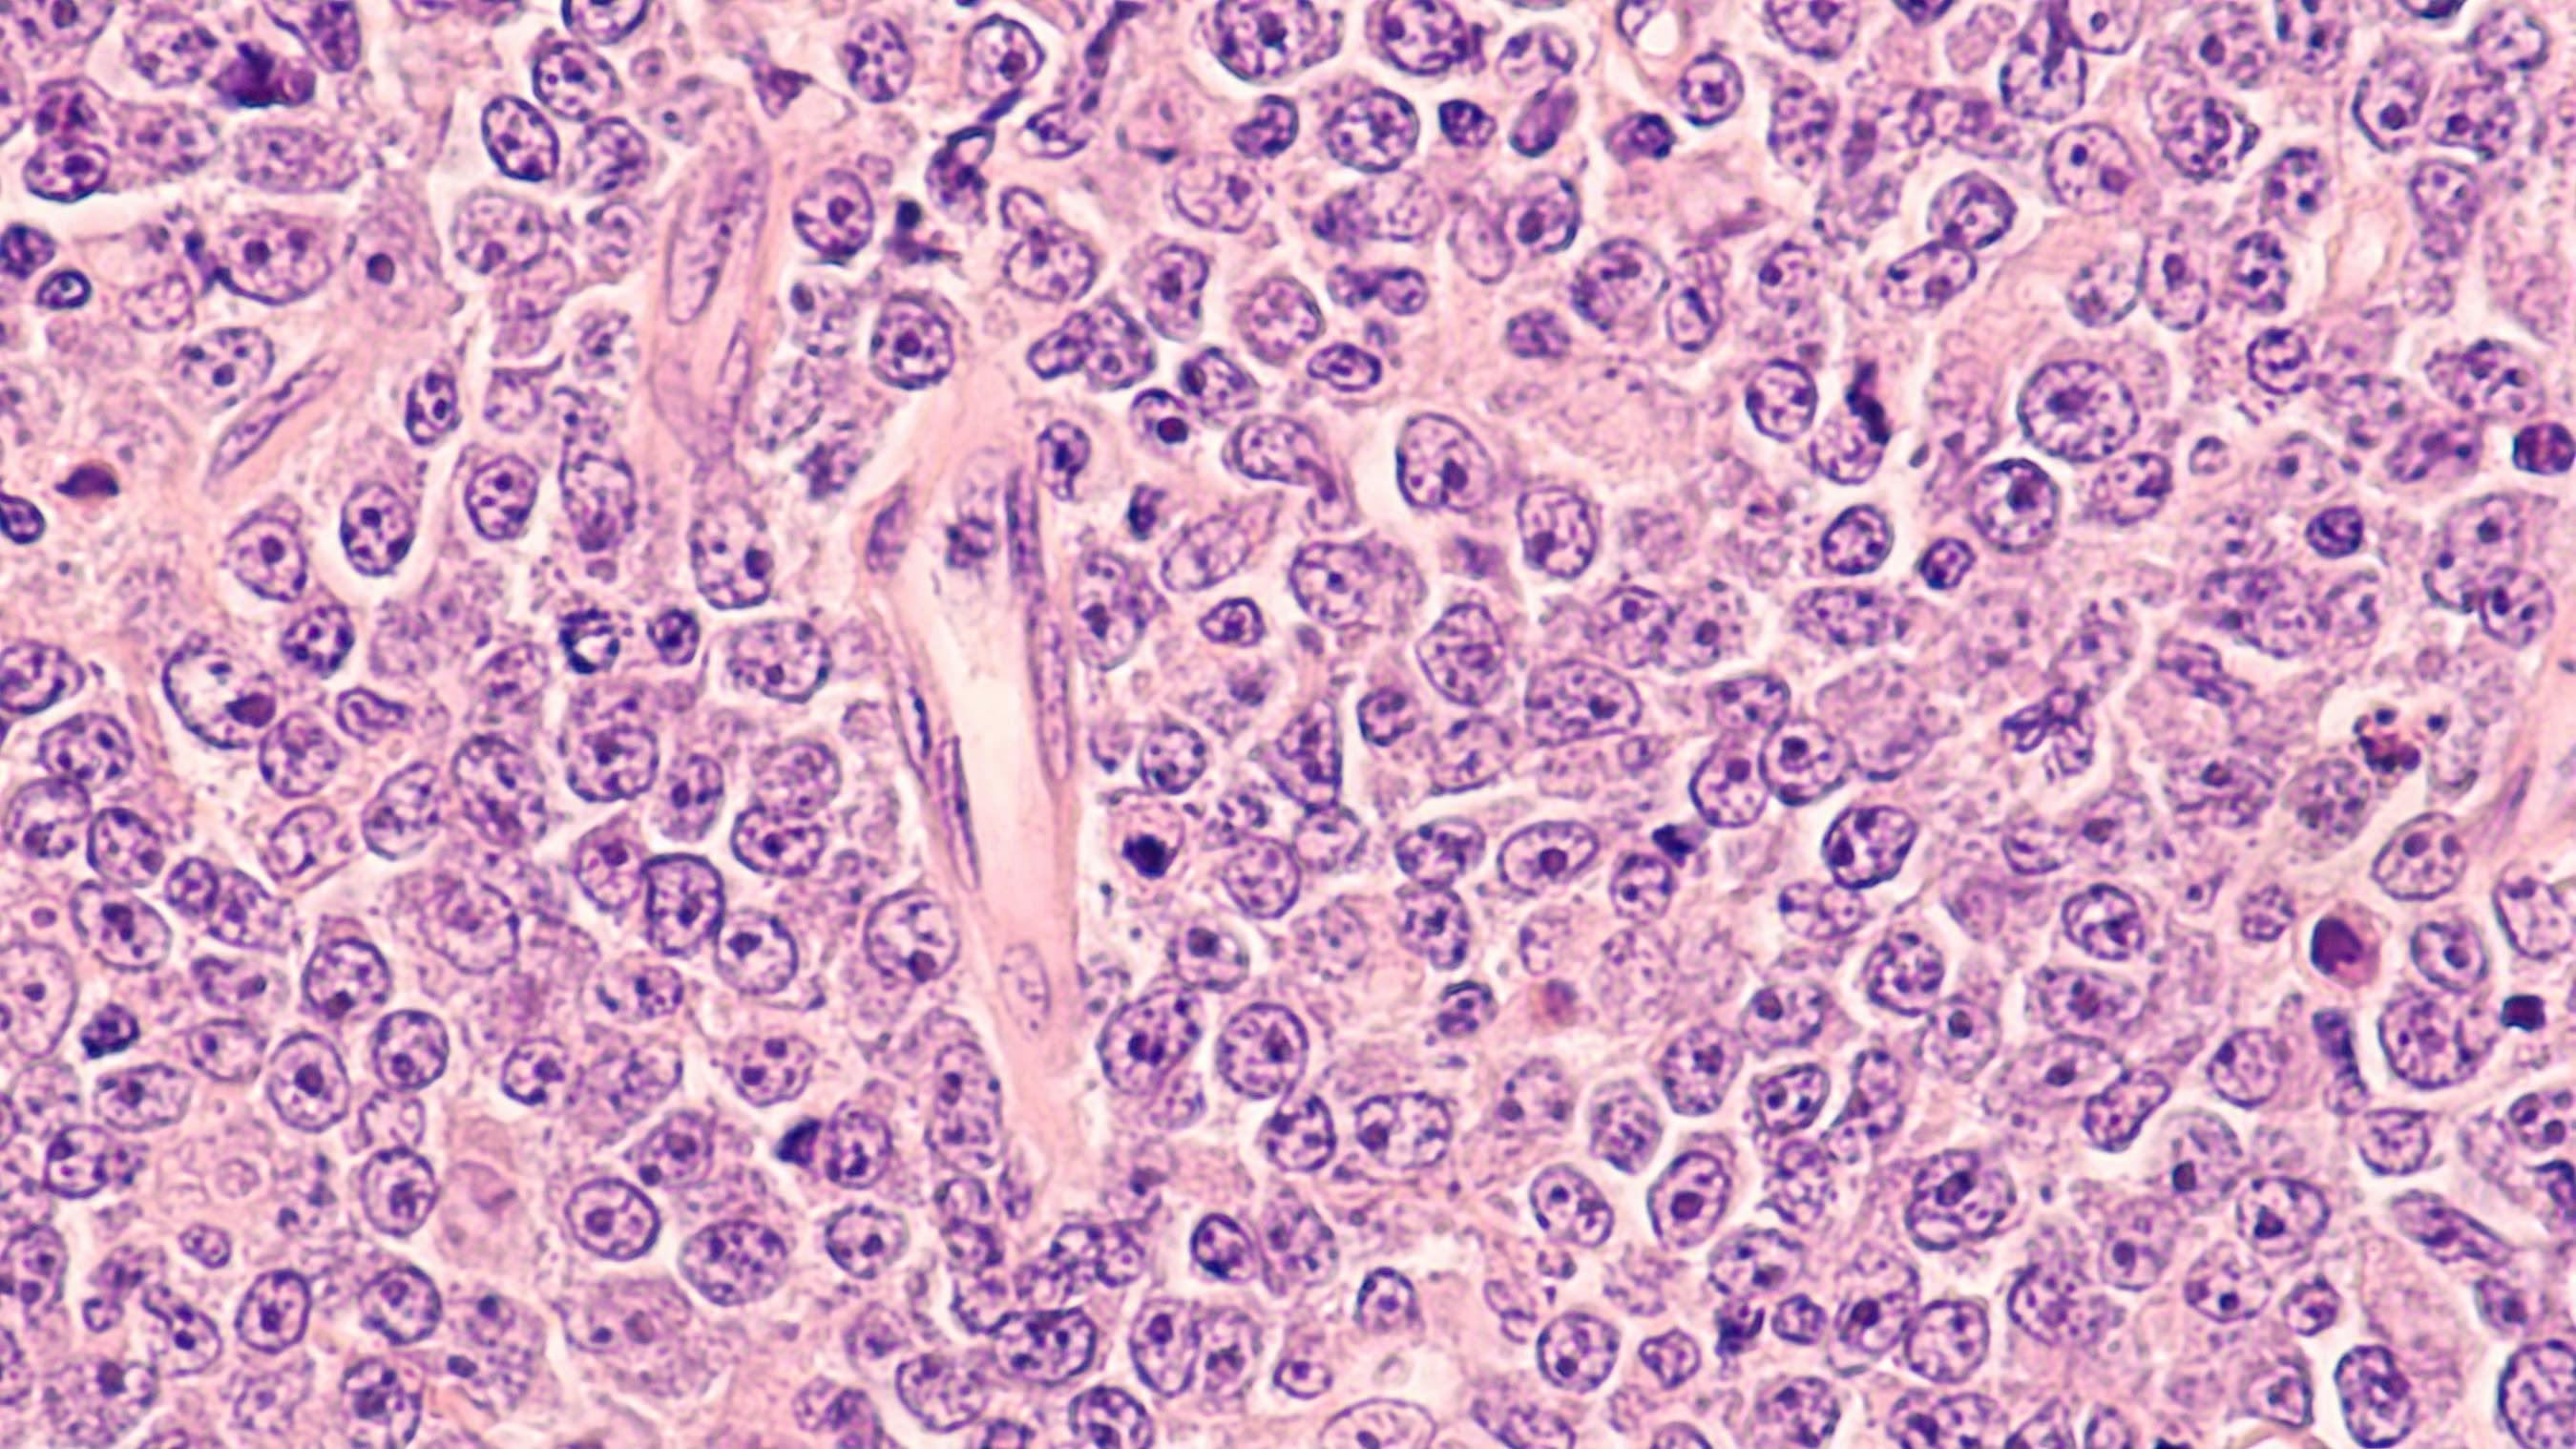 Diffuse large B-cell lymphoma | Image credit: David A Litman - stock.adobe.com